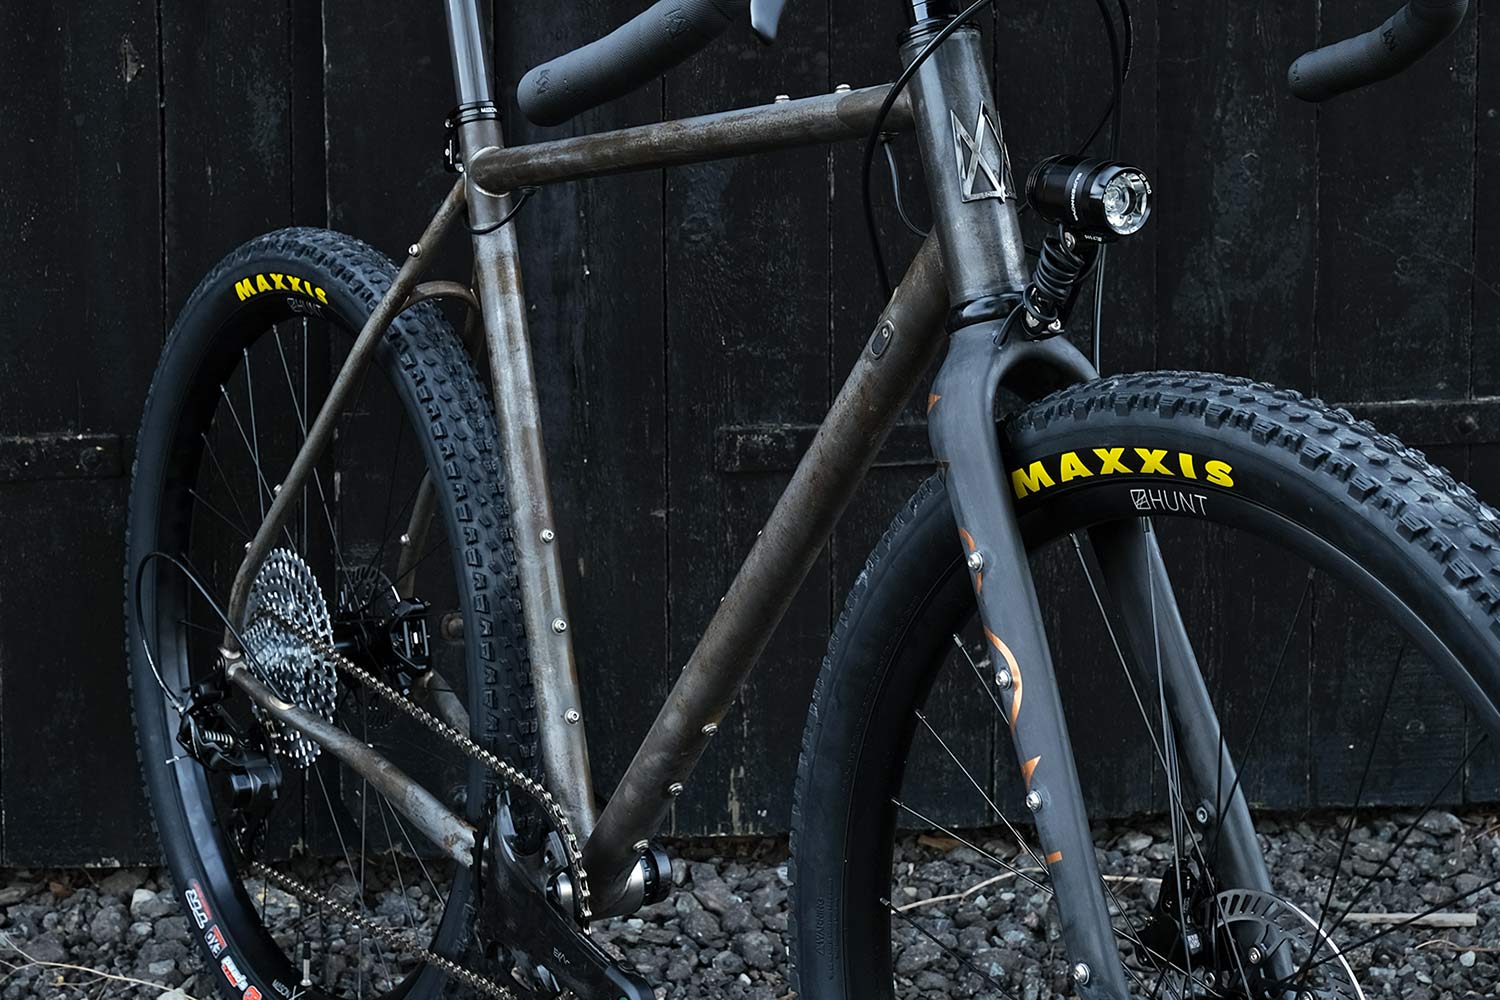 Mason Exposure steel adventure gravel bike, limited raw launch edition off-road bikepacking, frame detail